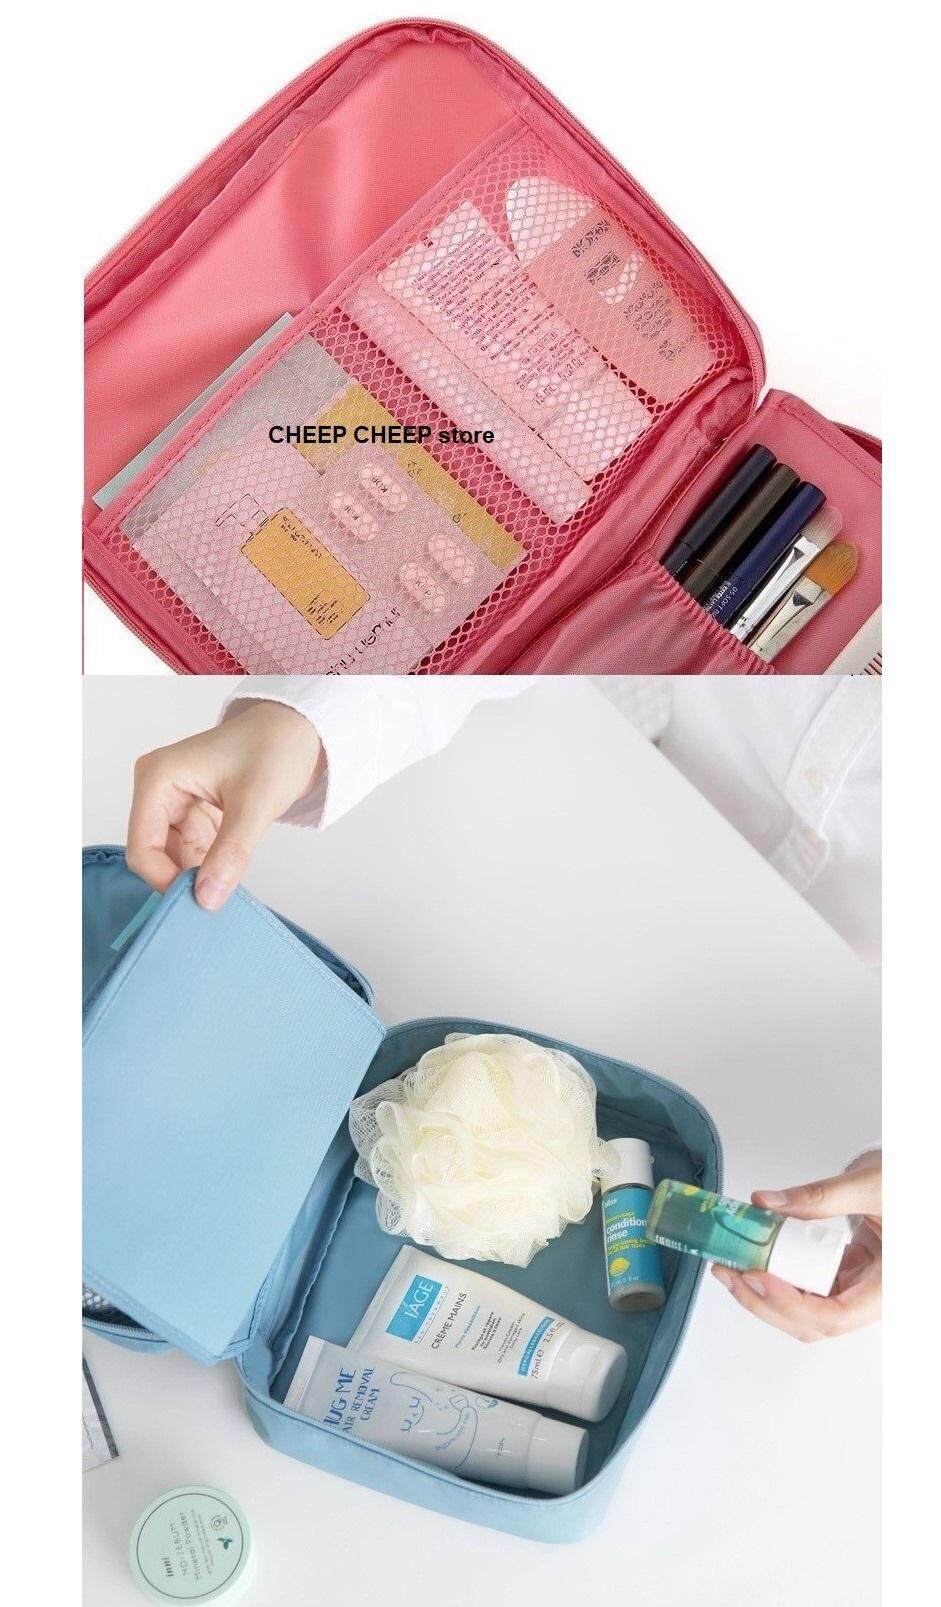 PINK Korean Cosmetic Travel Pouch Waterproof Multifunction Toiletries Organizer Bag Monopoly Version 2